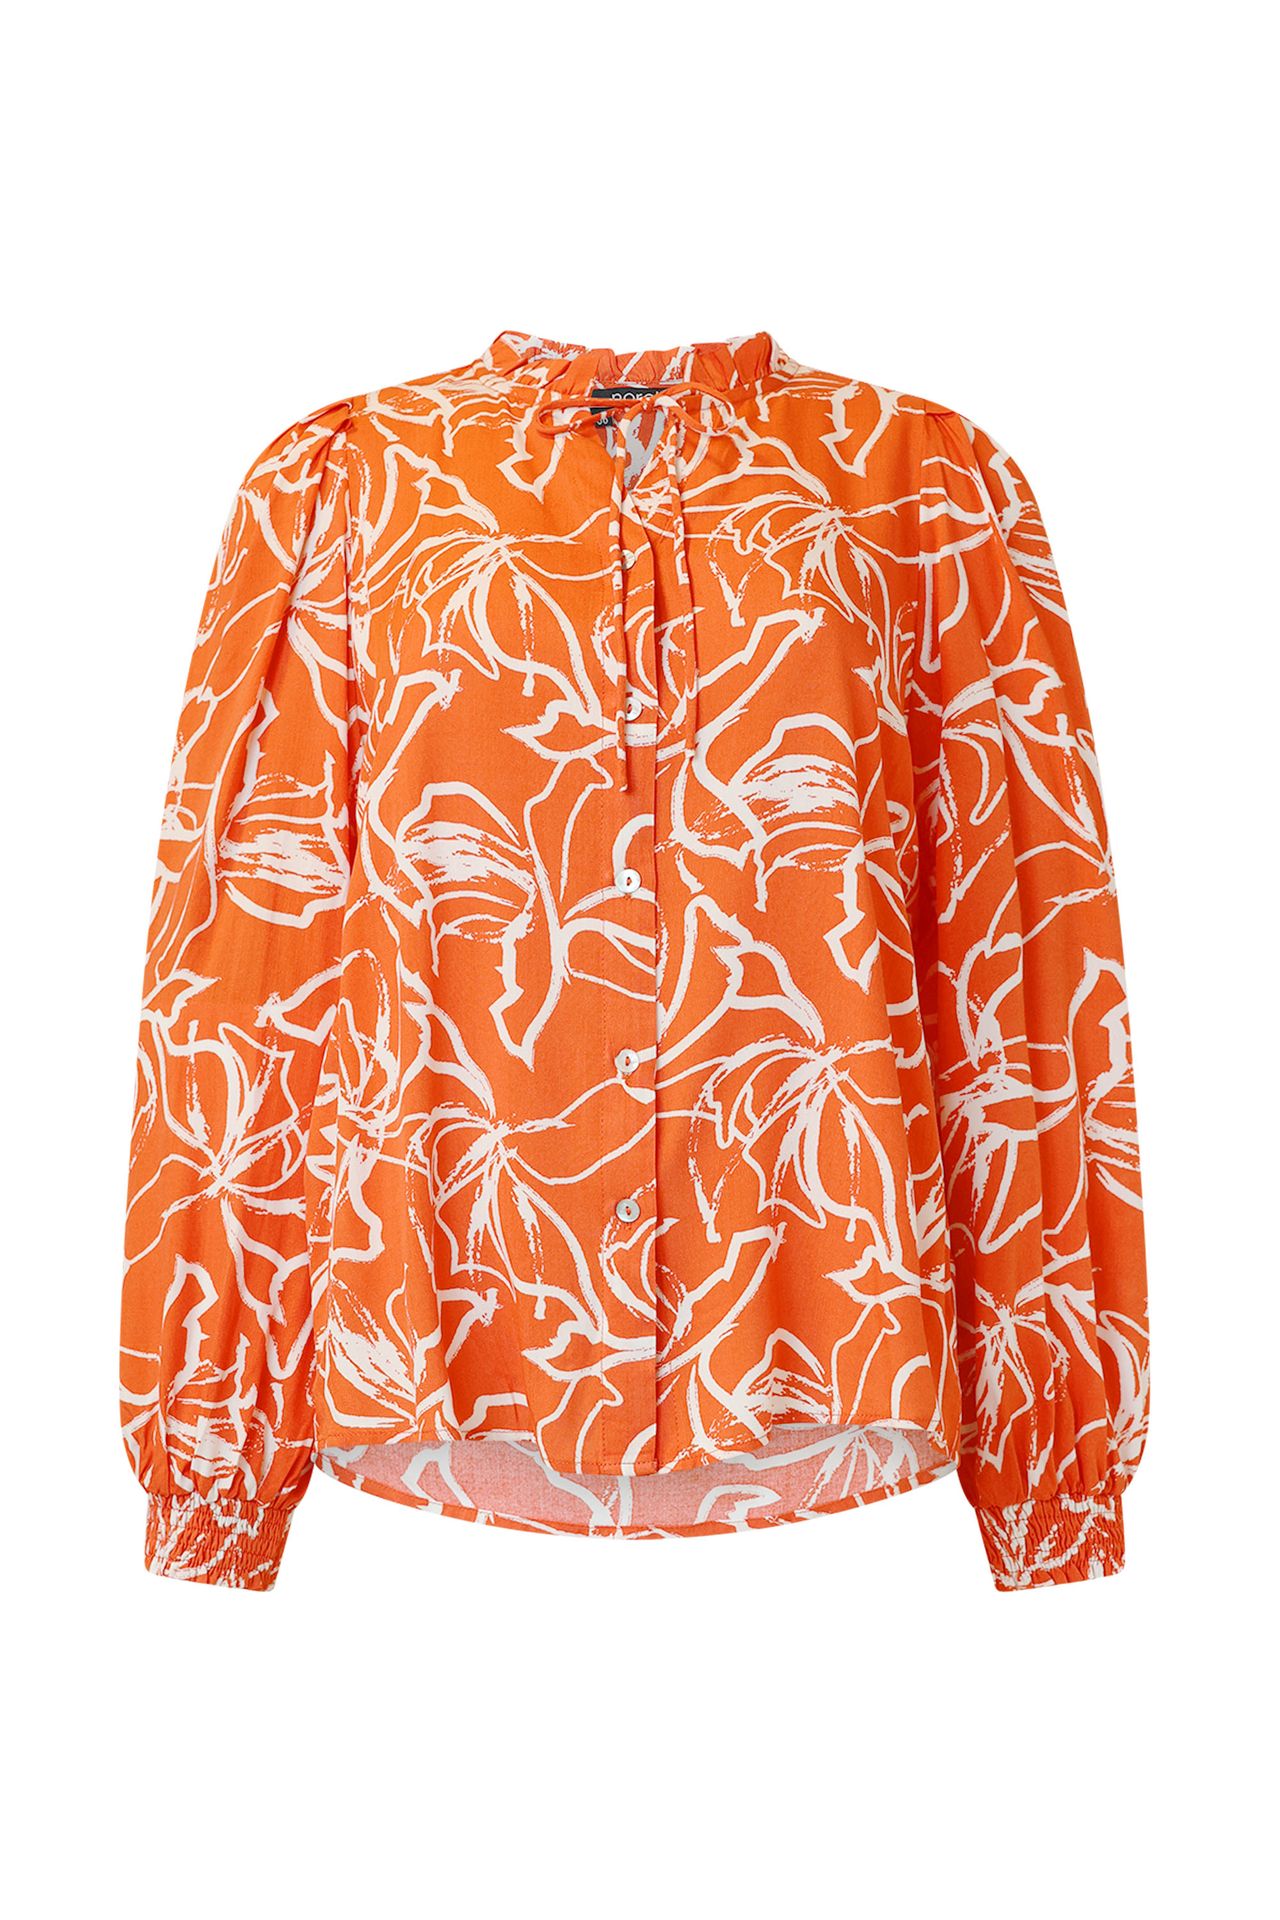 Norah Oranje blouse orange/ecru 213893-741